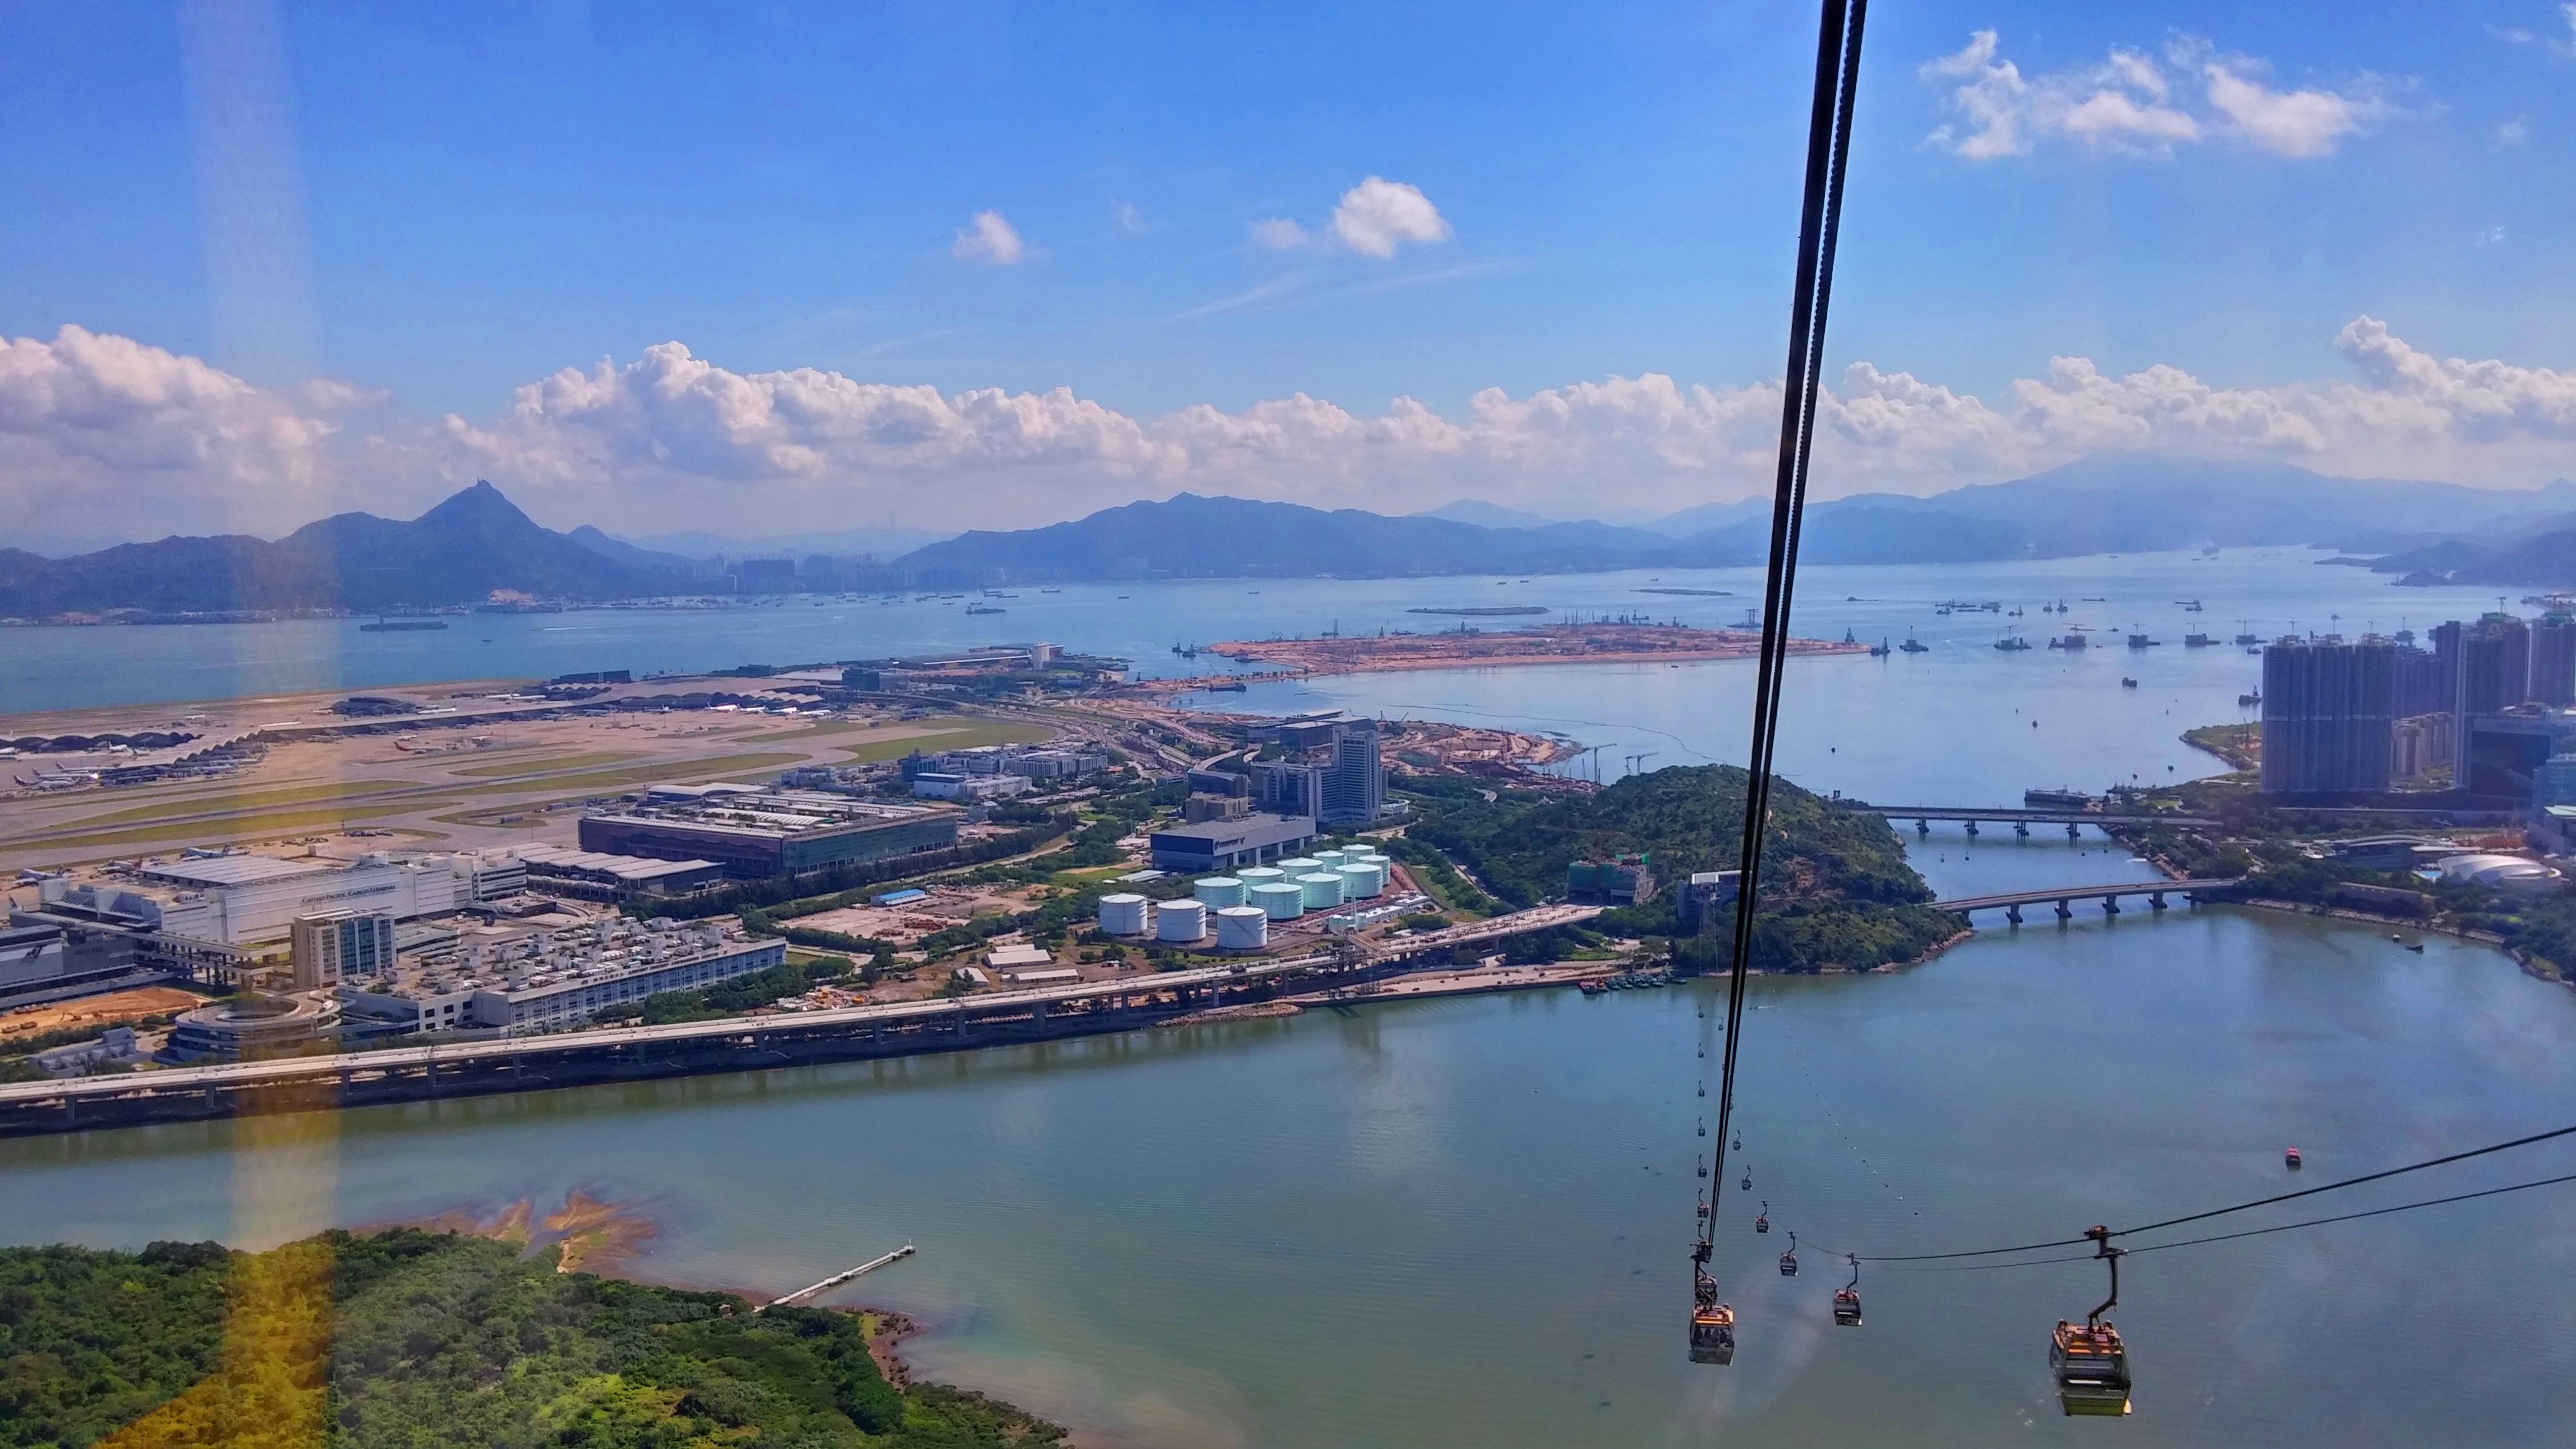 New Territories and Hong Kong Airport from Ngong Ping 360 Cable Car